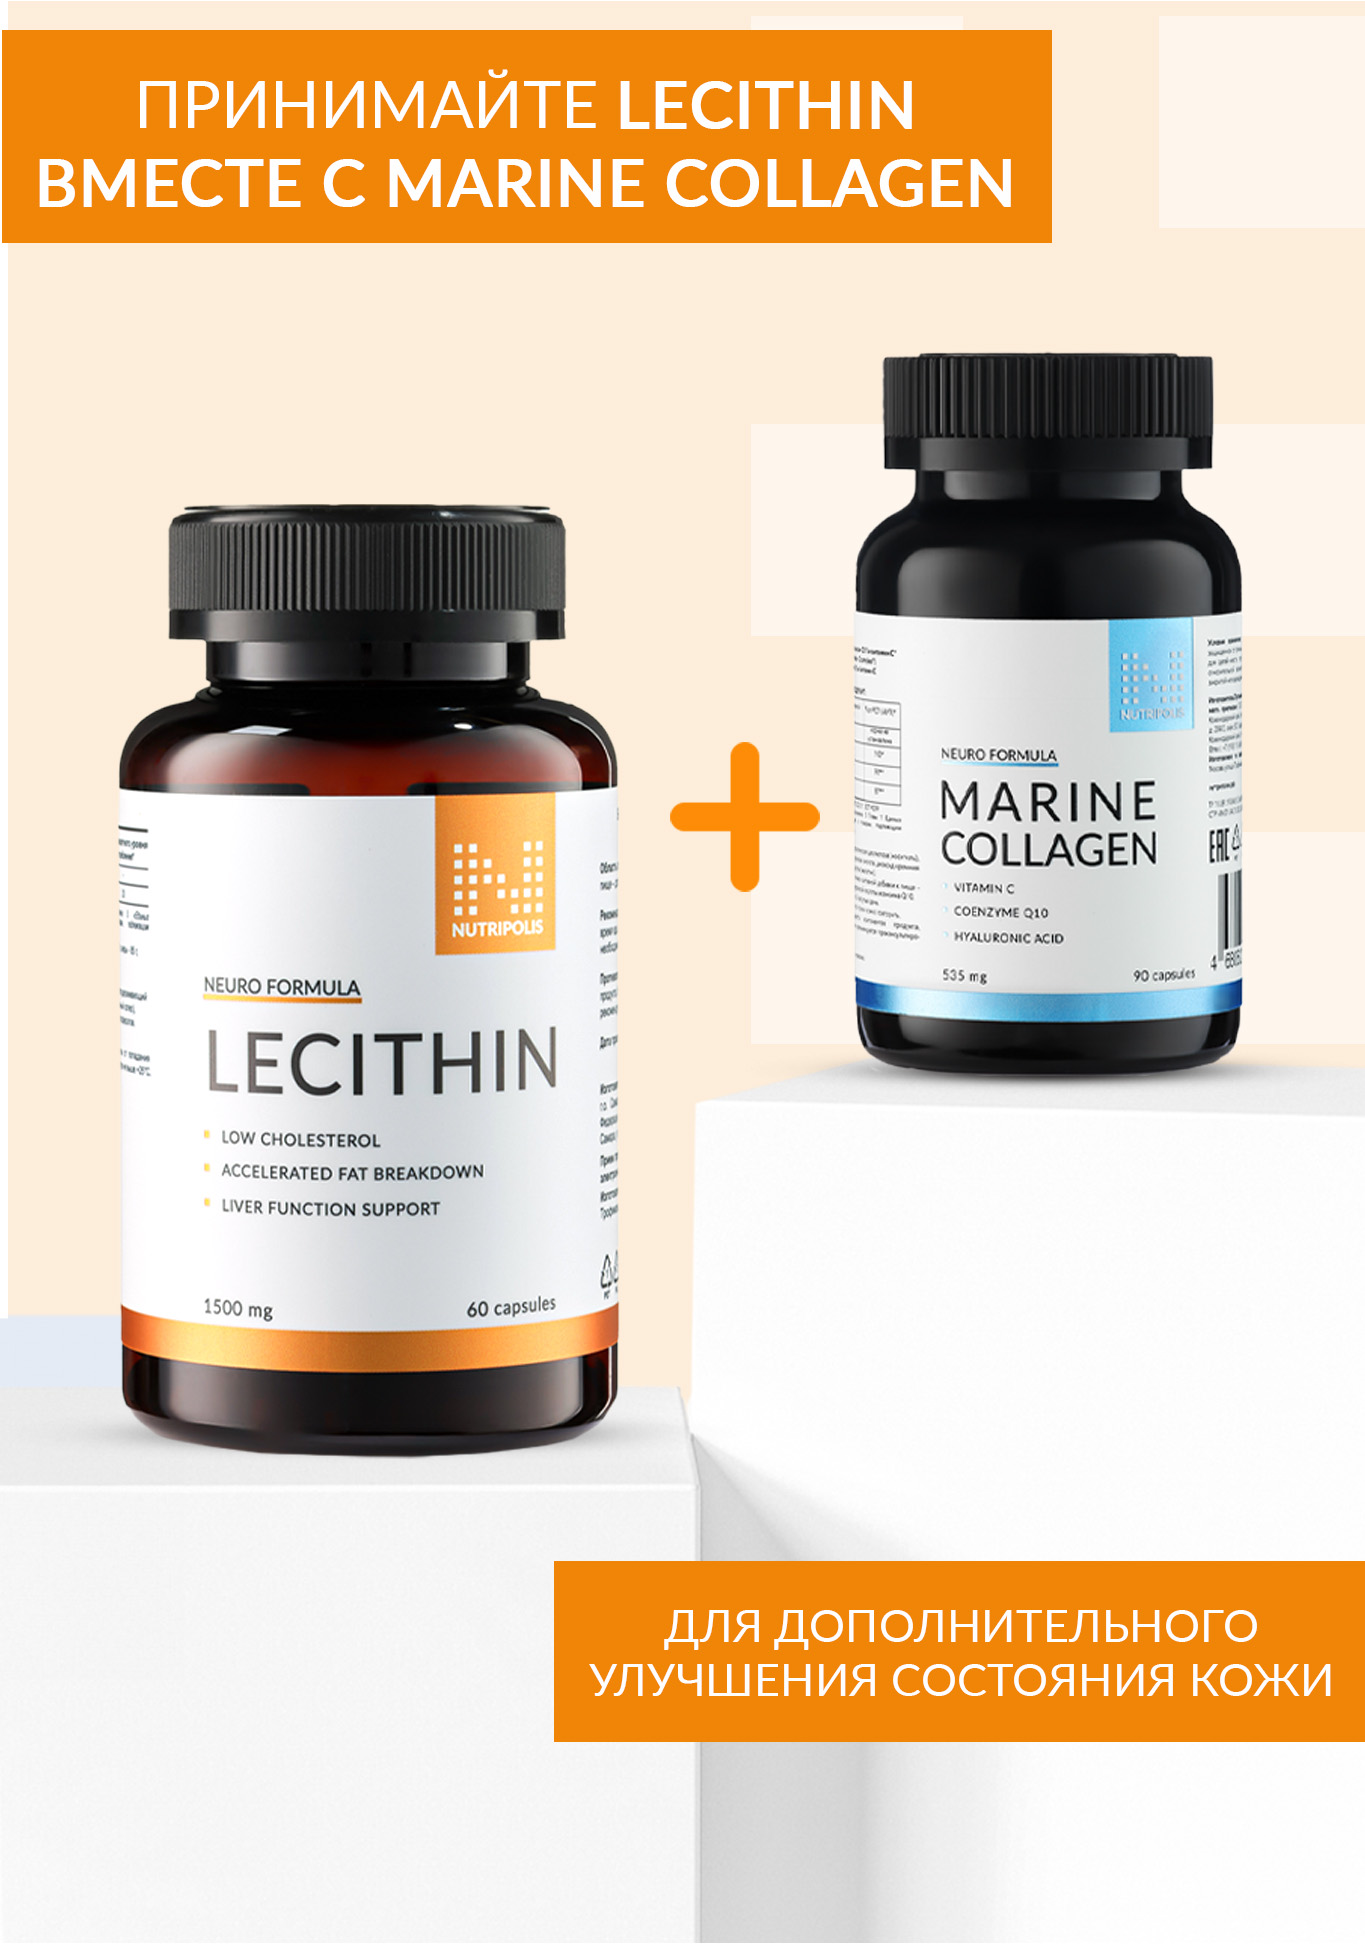 Lecithin (Лецитин) NUTRIPOLIS - фото 6